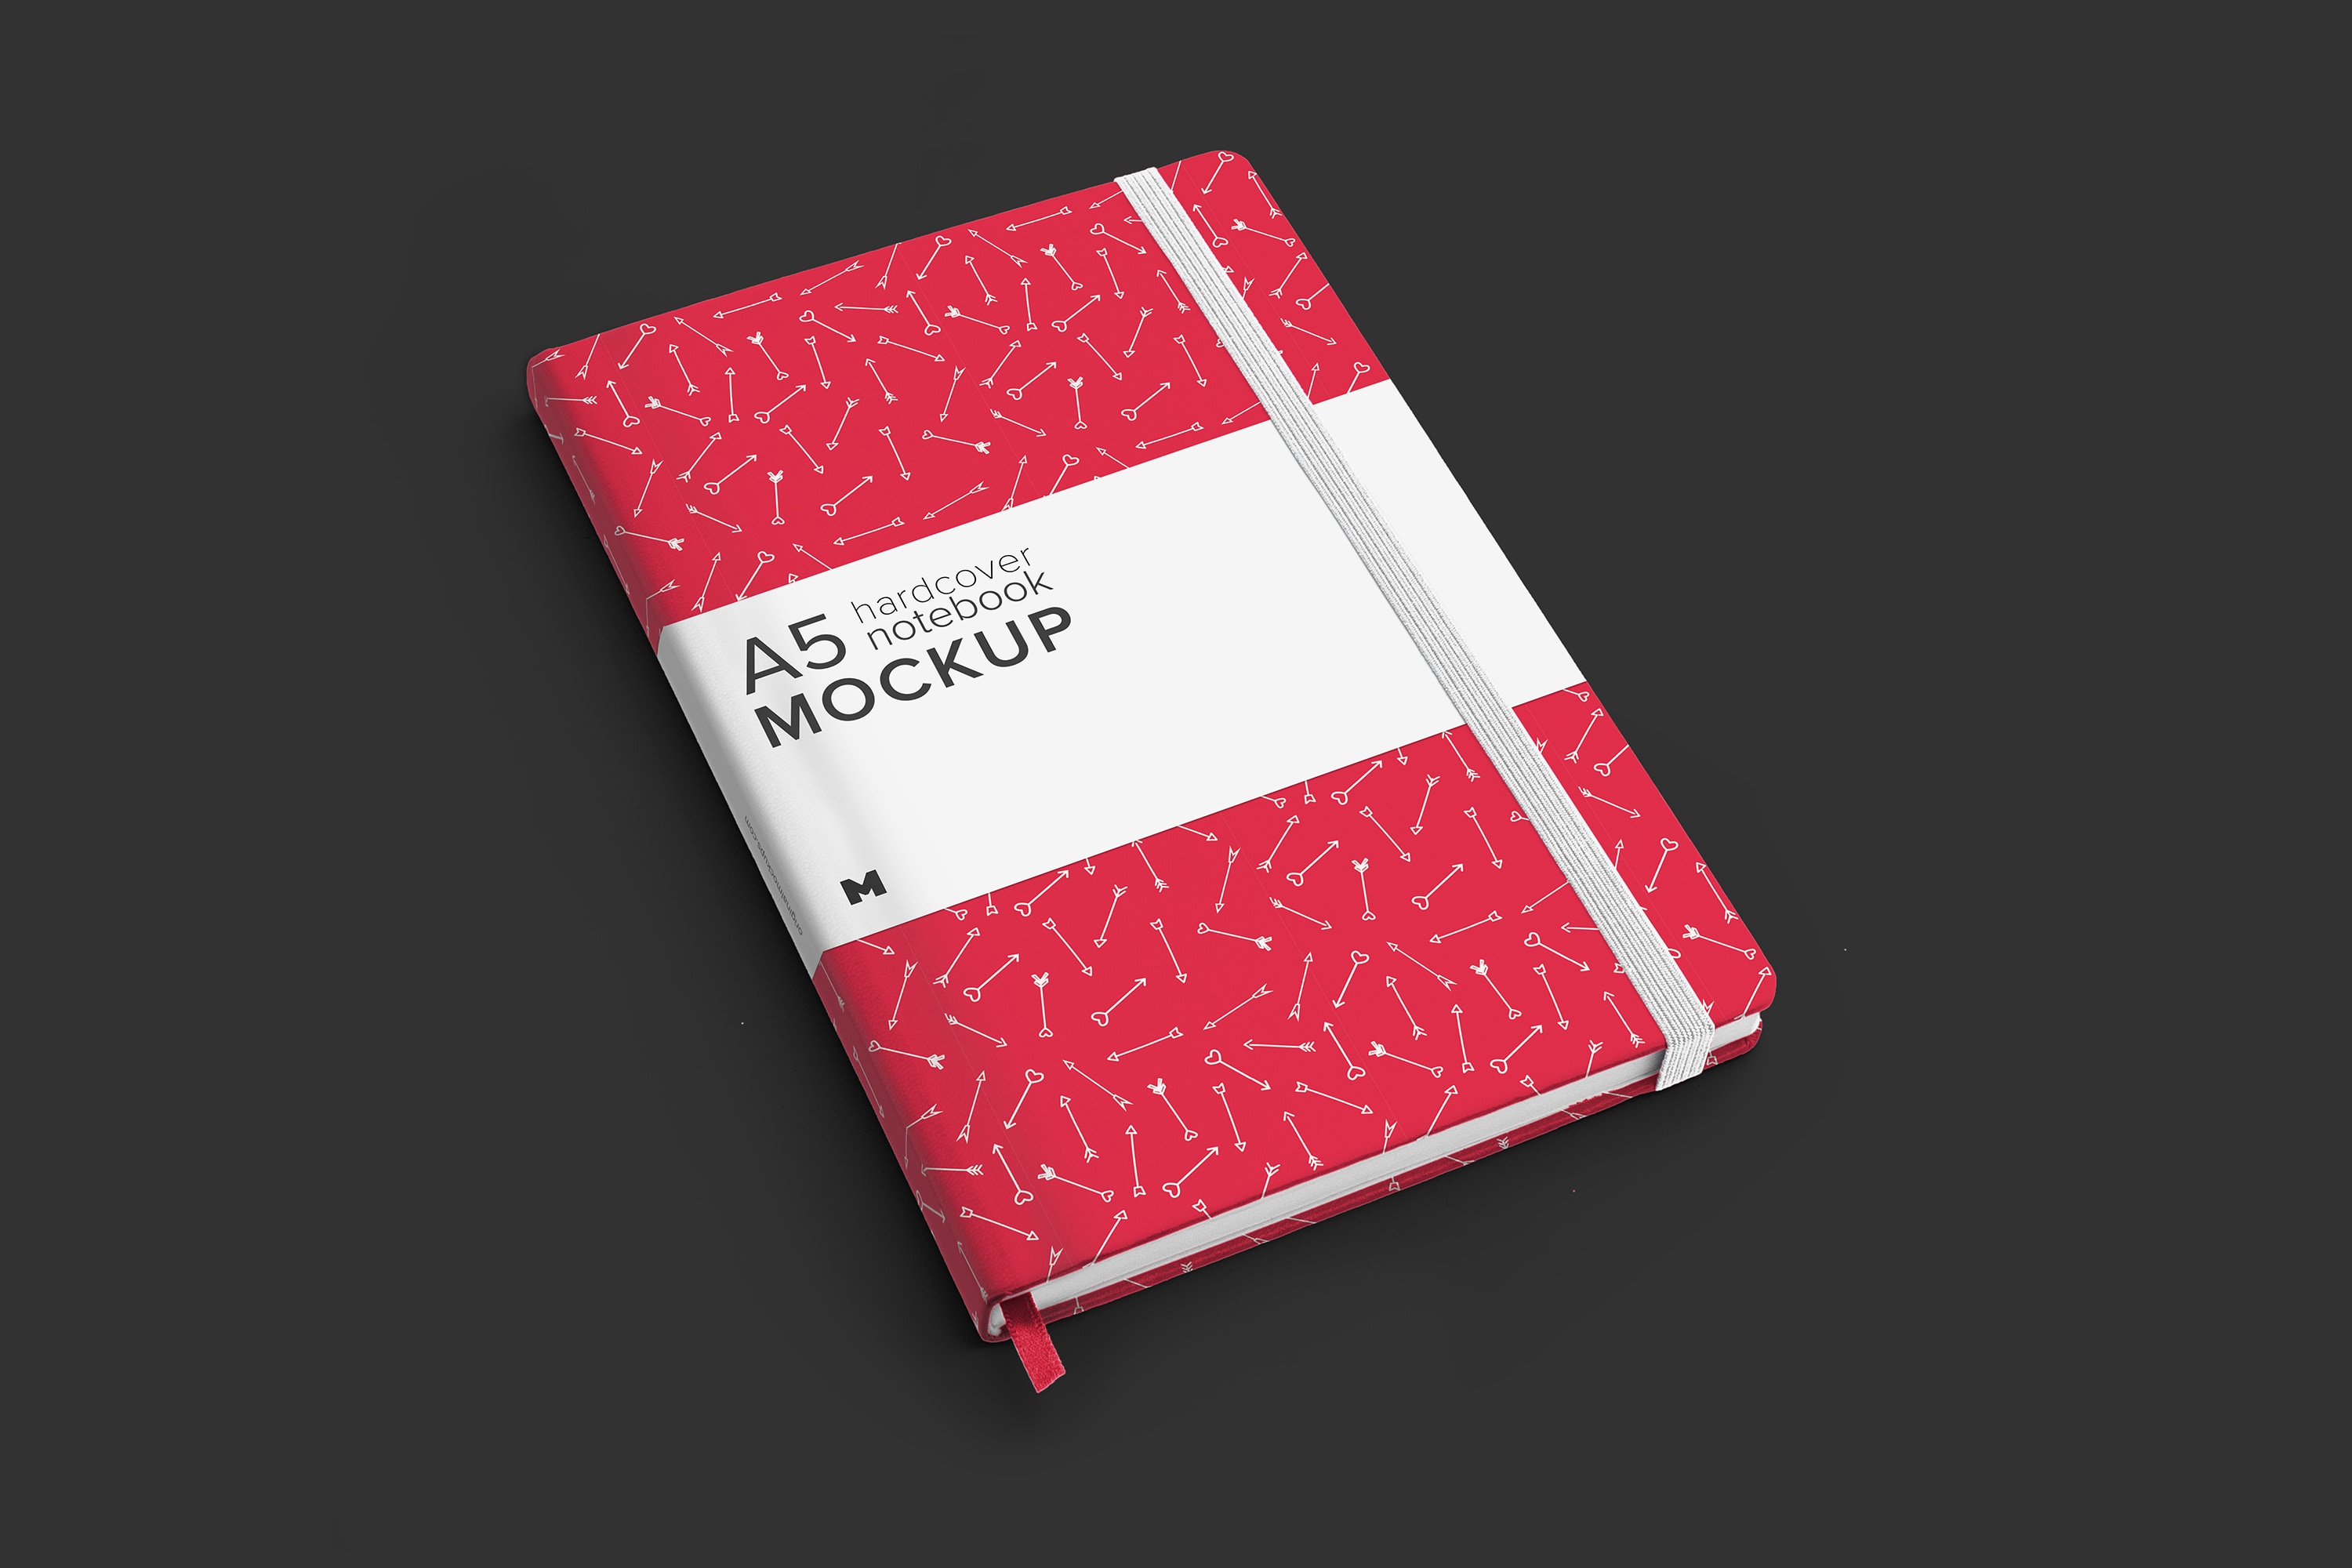 A5精装笔记本/记事本外观设计样机模板01 A5 Hardcover Notebook Mockup 01插图(3)